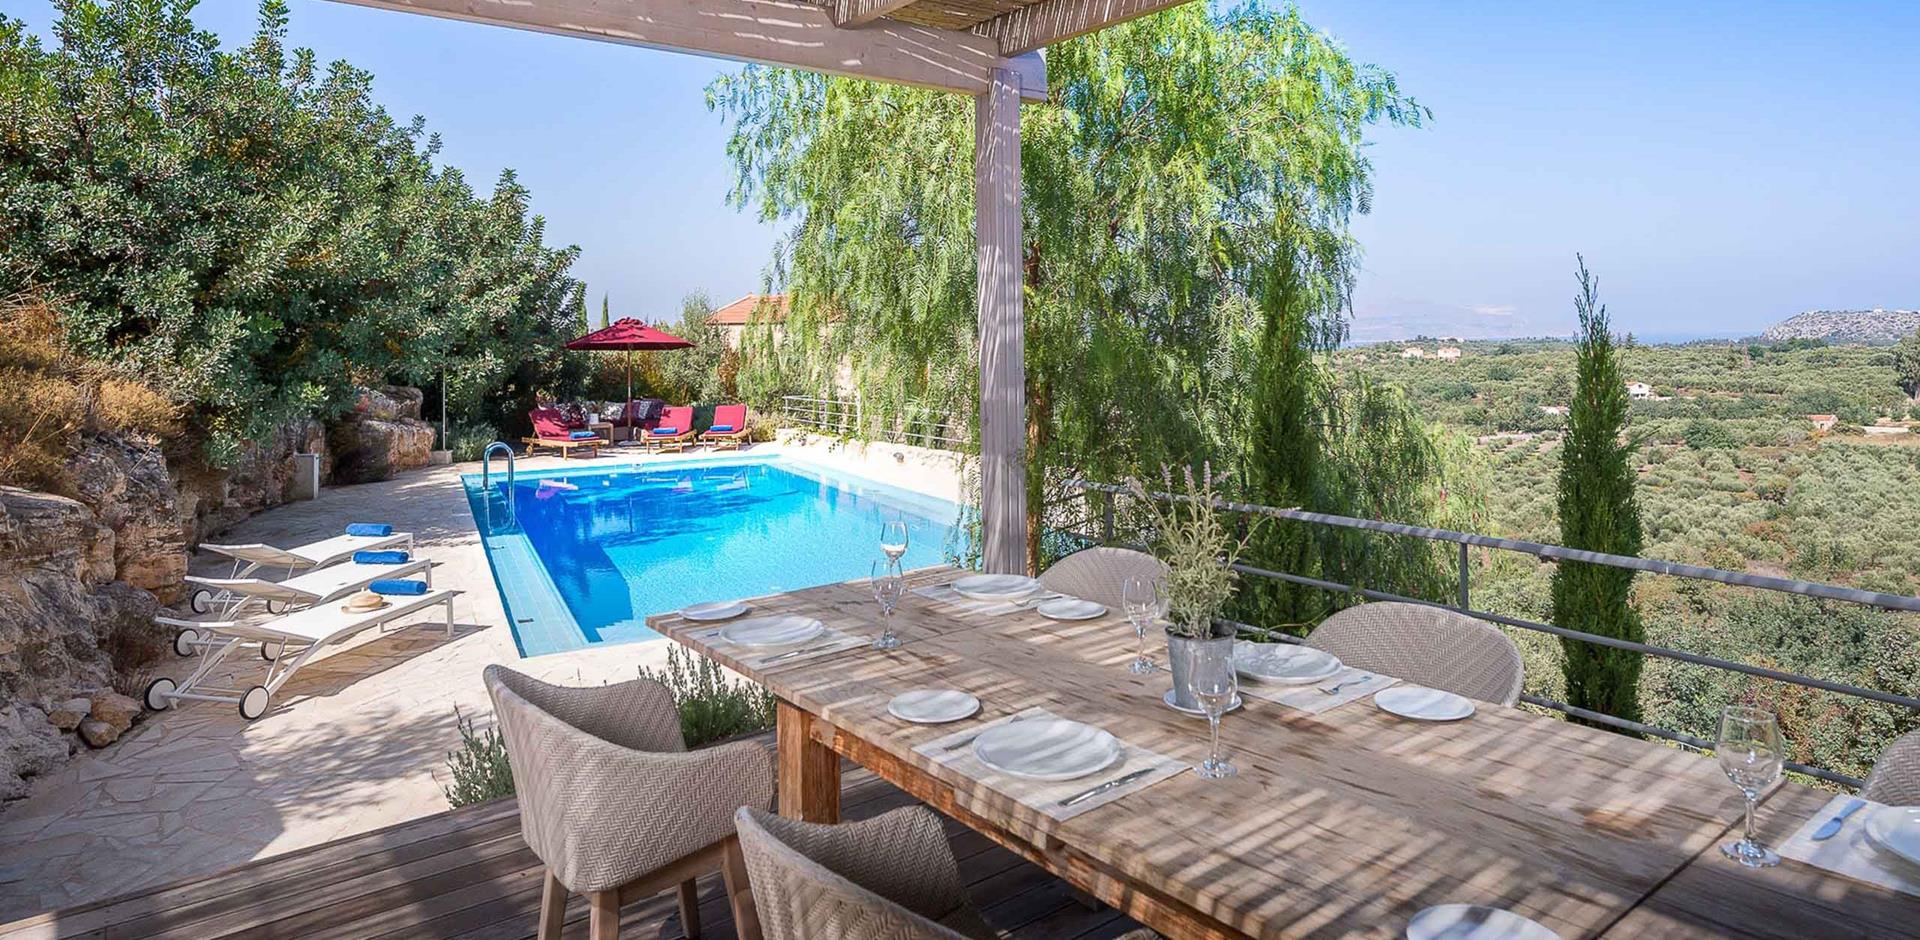 Al Fresco Dining Area, The Rosemary Estate, Crete